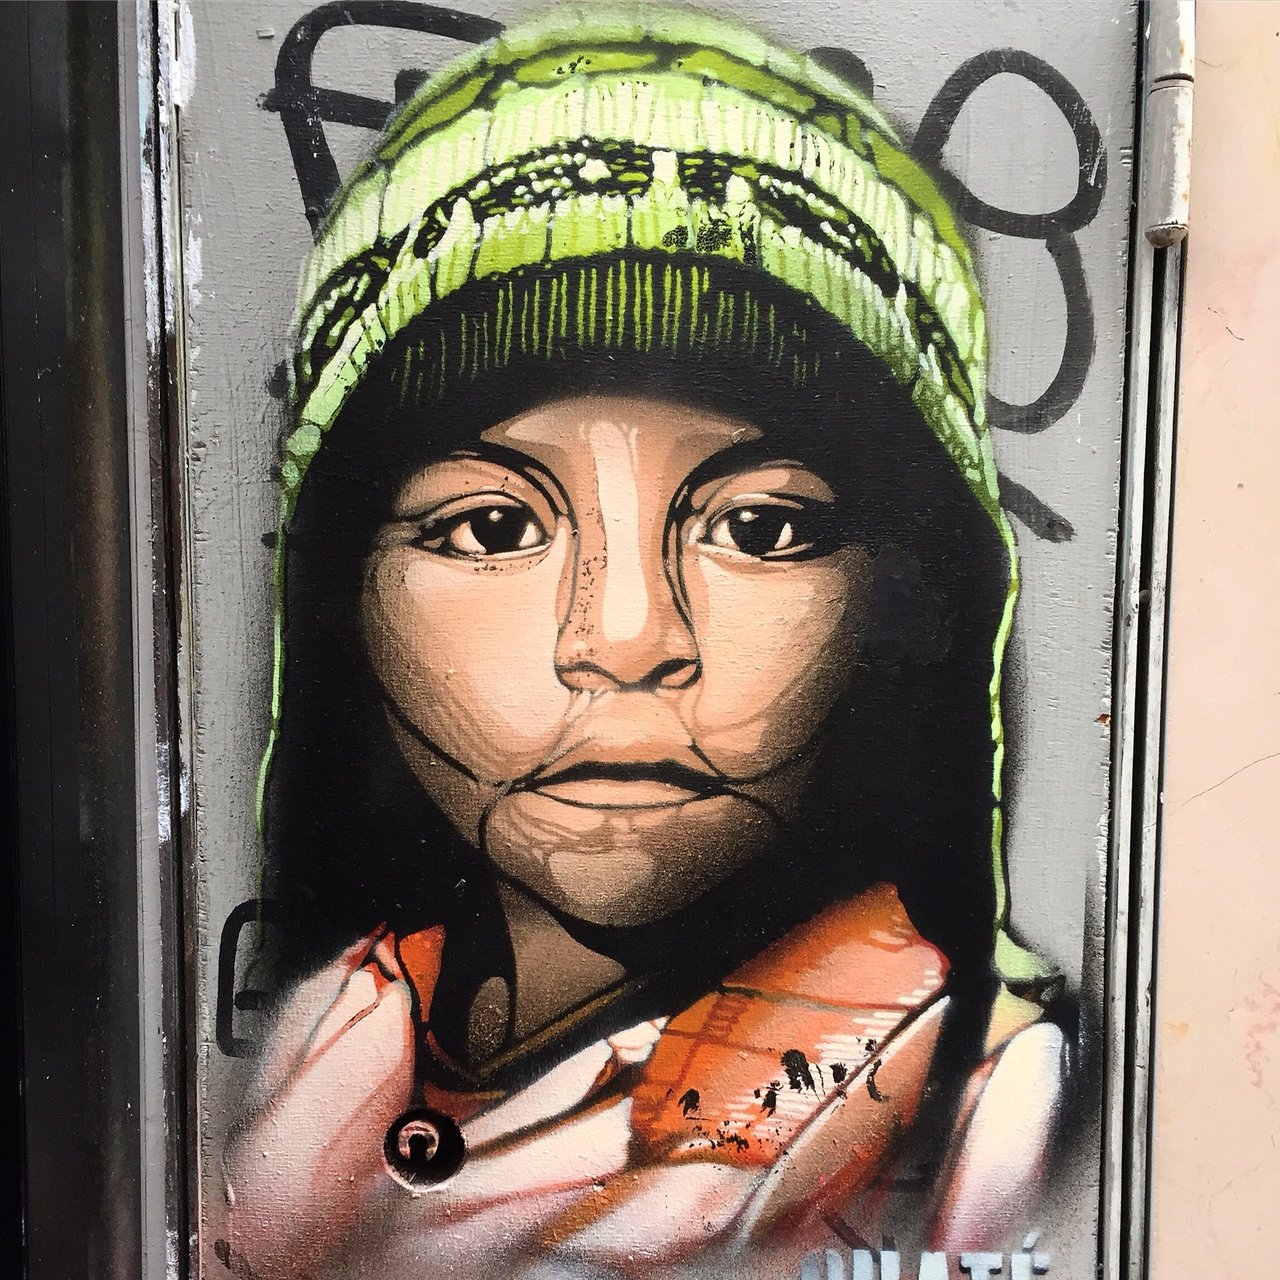 By #guatemao #temao #streetart #graffiti #graff #spray #bombing #wall#urbanart #paris https://t.co/azrPkWYONS